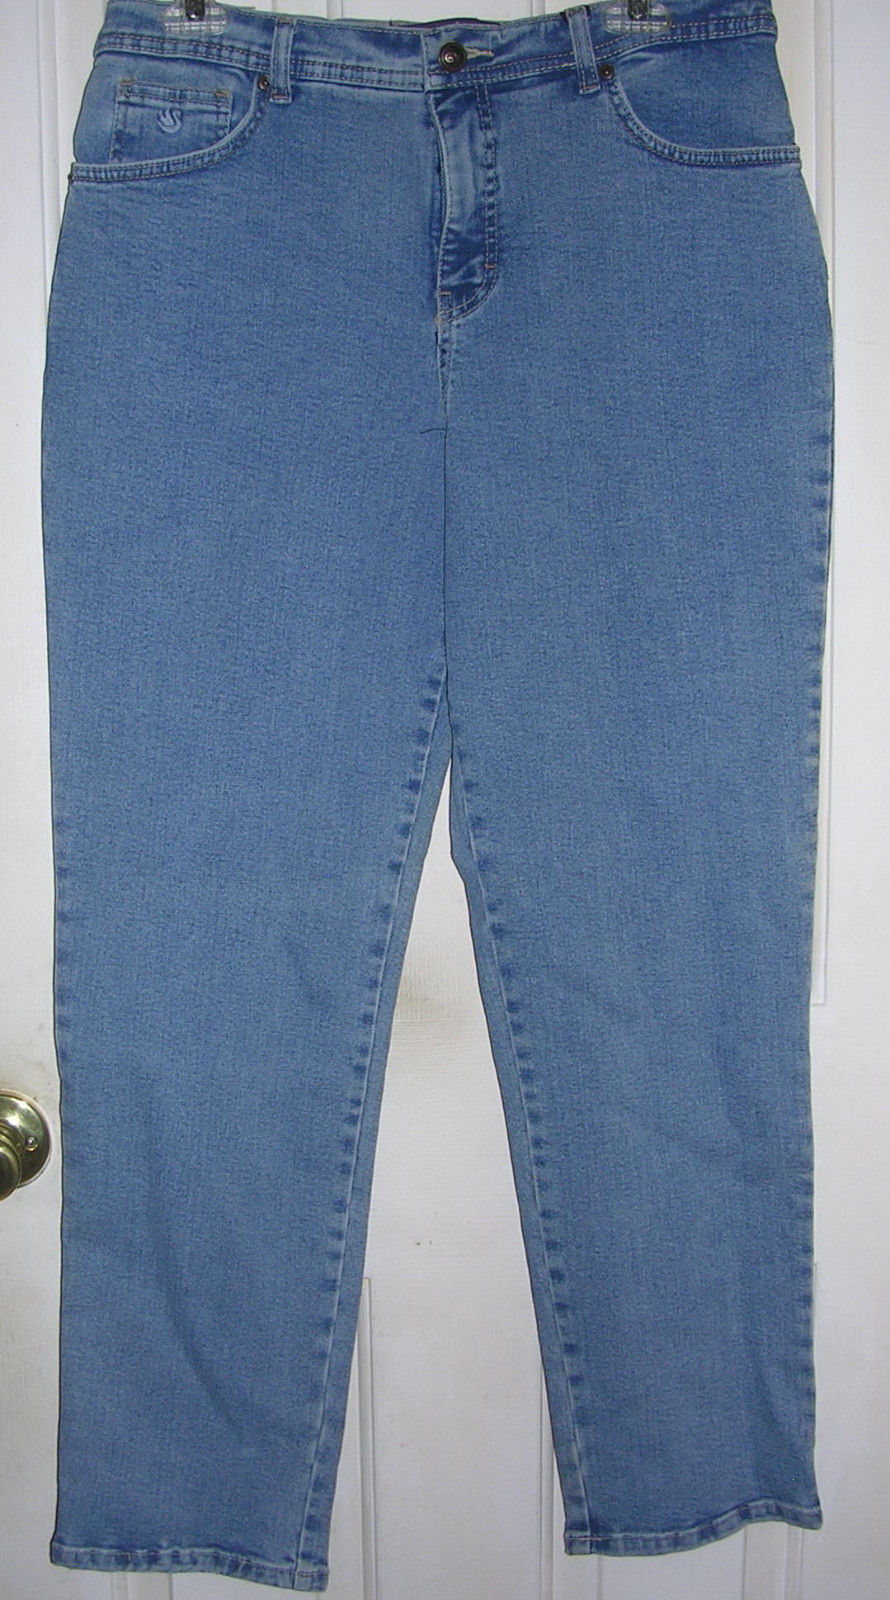 gloria vanderbilt amanda 2.0 jeans